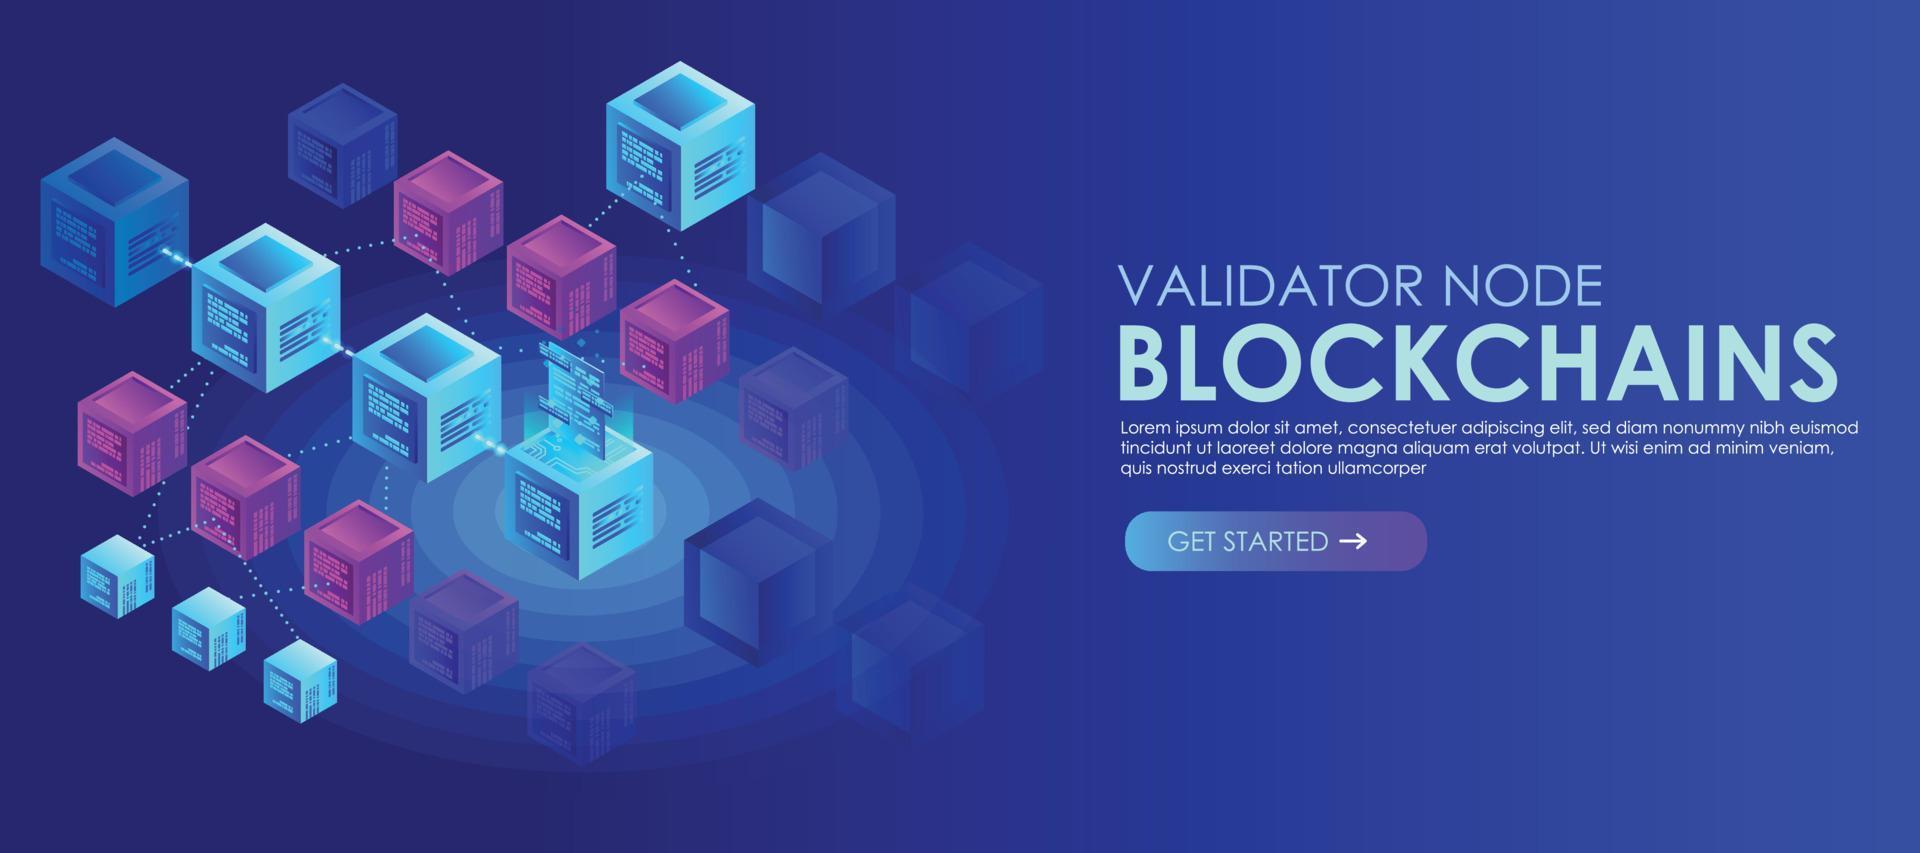 bloco validador nó blockchain isométrico vetor